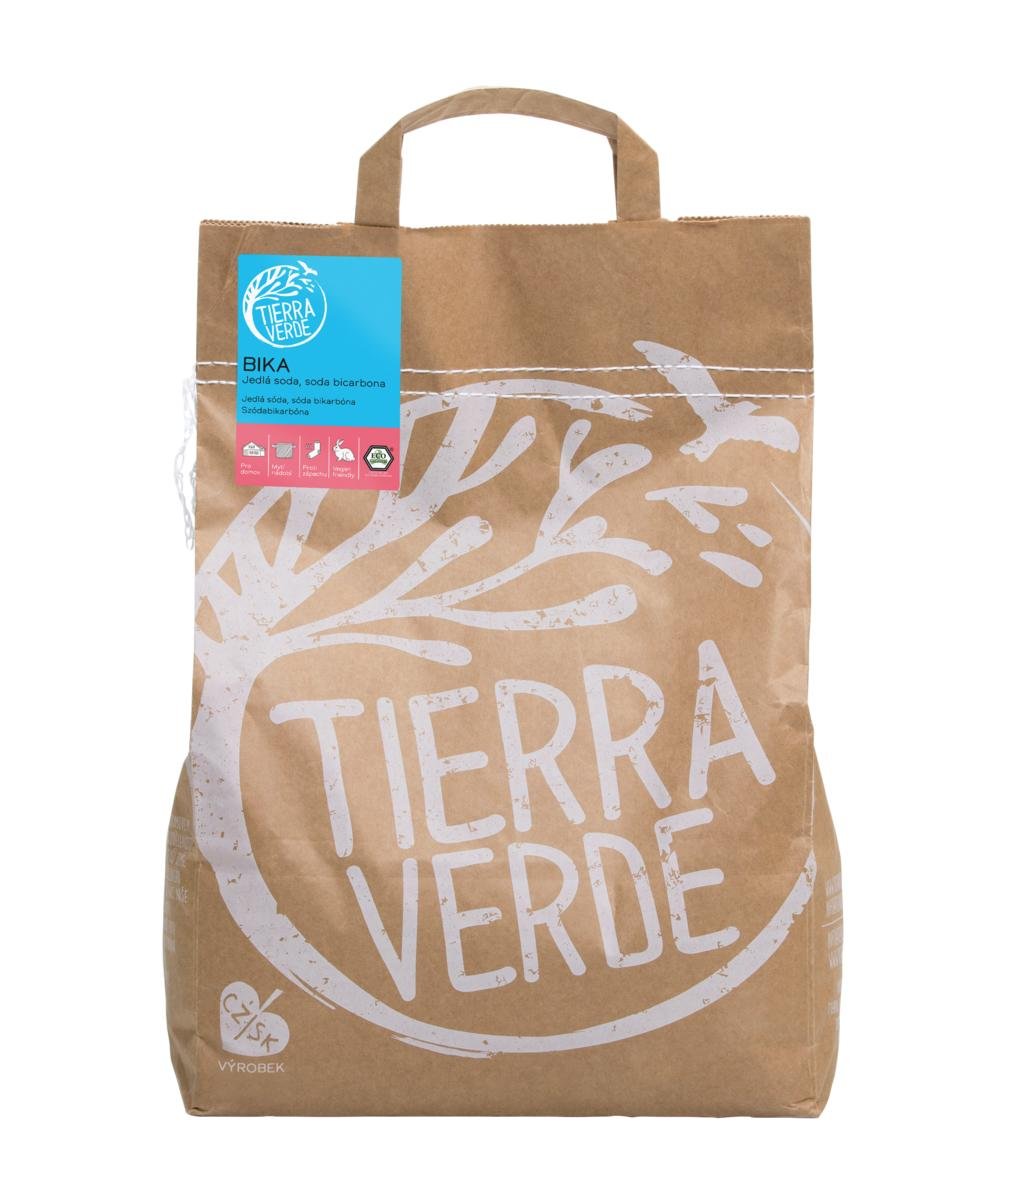 Tierra Verde BIKA – Jedlá soda (Bikarbona) 5 kg pytel Tierra Verde